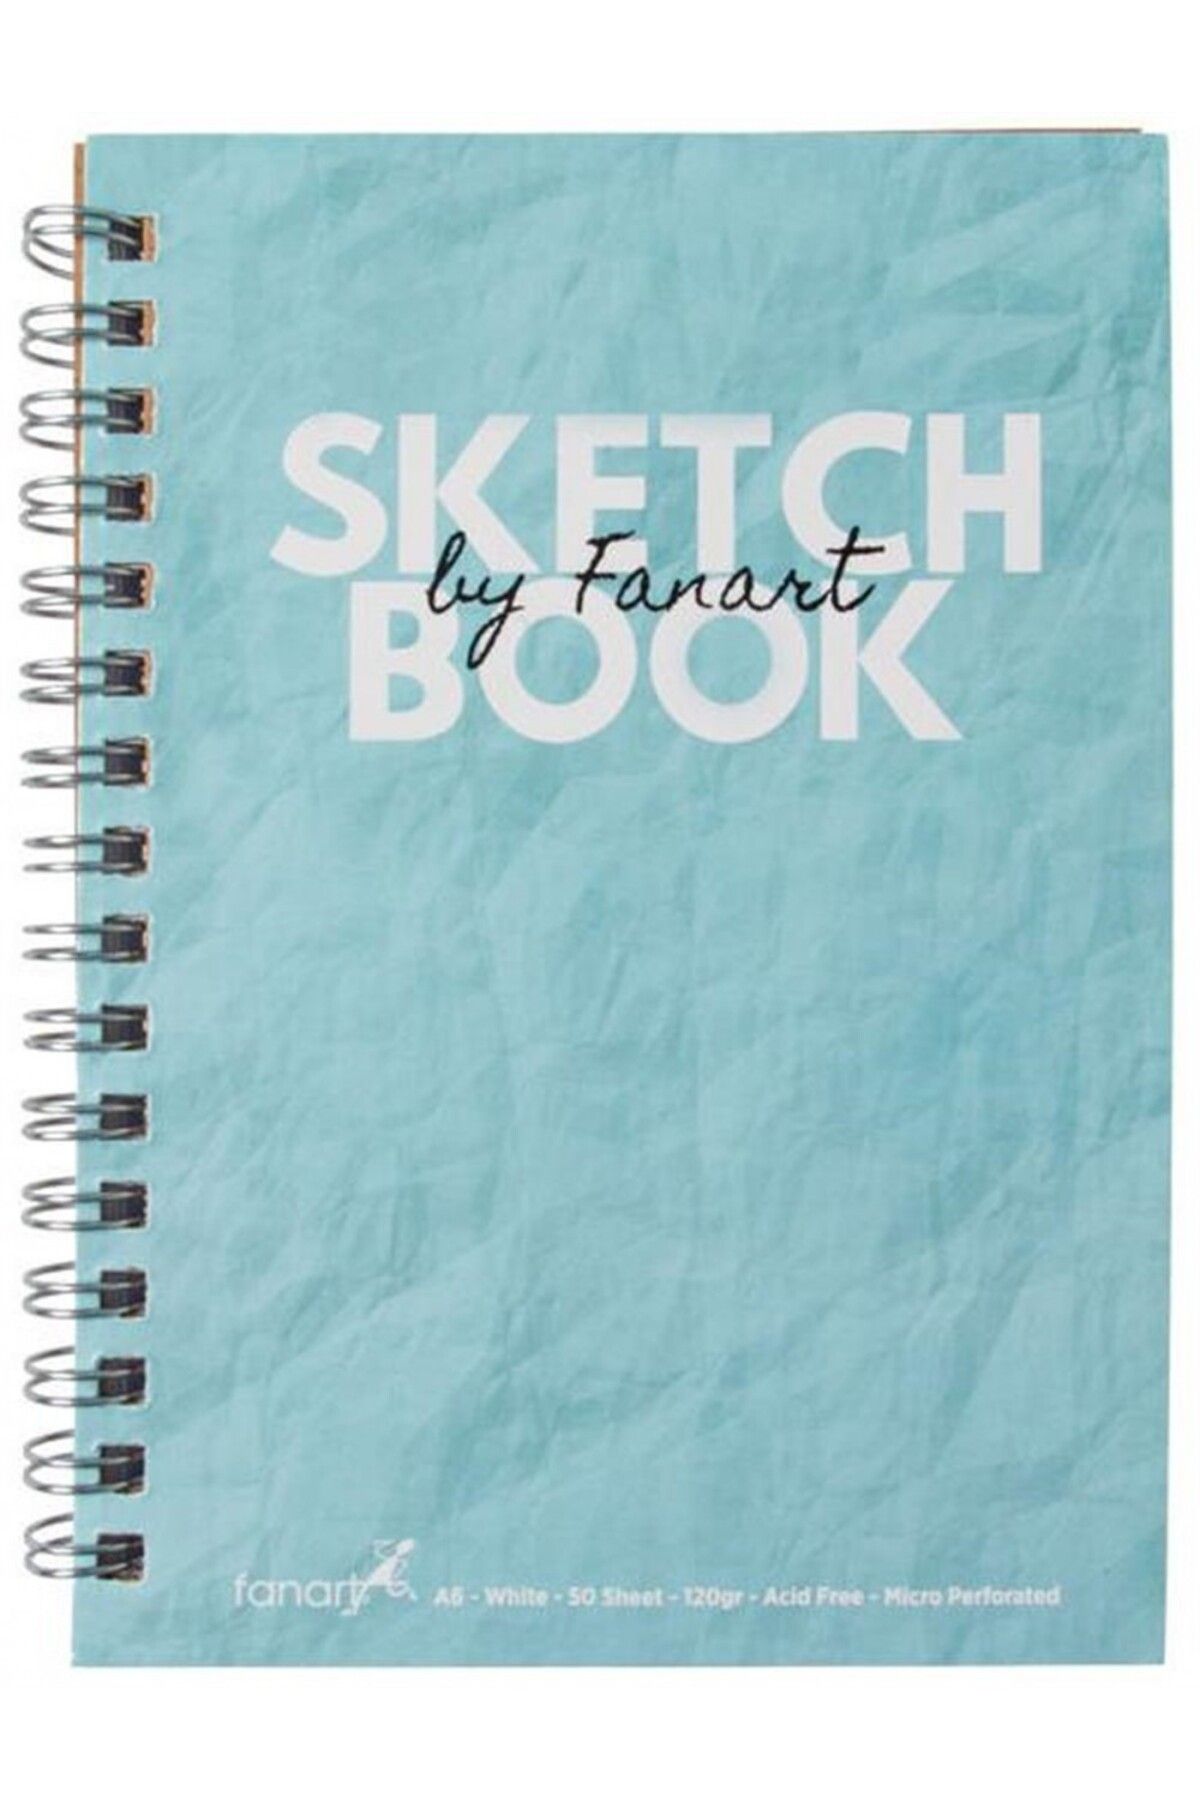 Fanart Sketch Book (ESKİZ DEFTERİ) A5 Spiralli 120 gr Beyaz Kağıt- Turkuaz